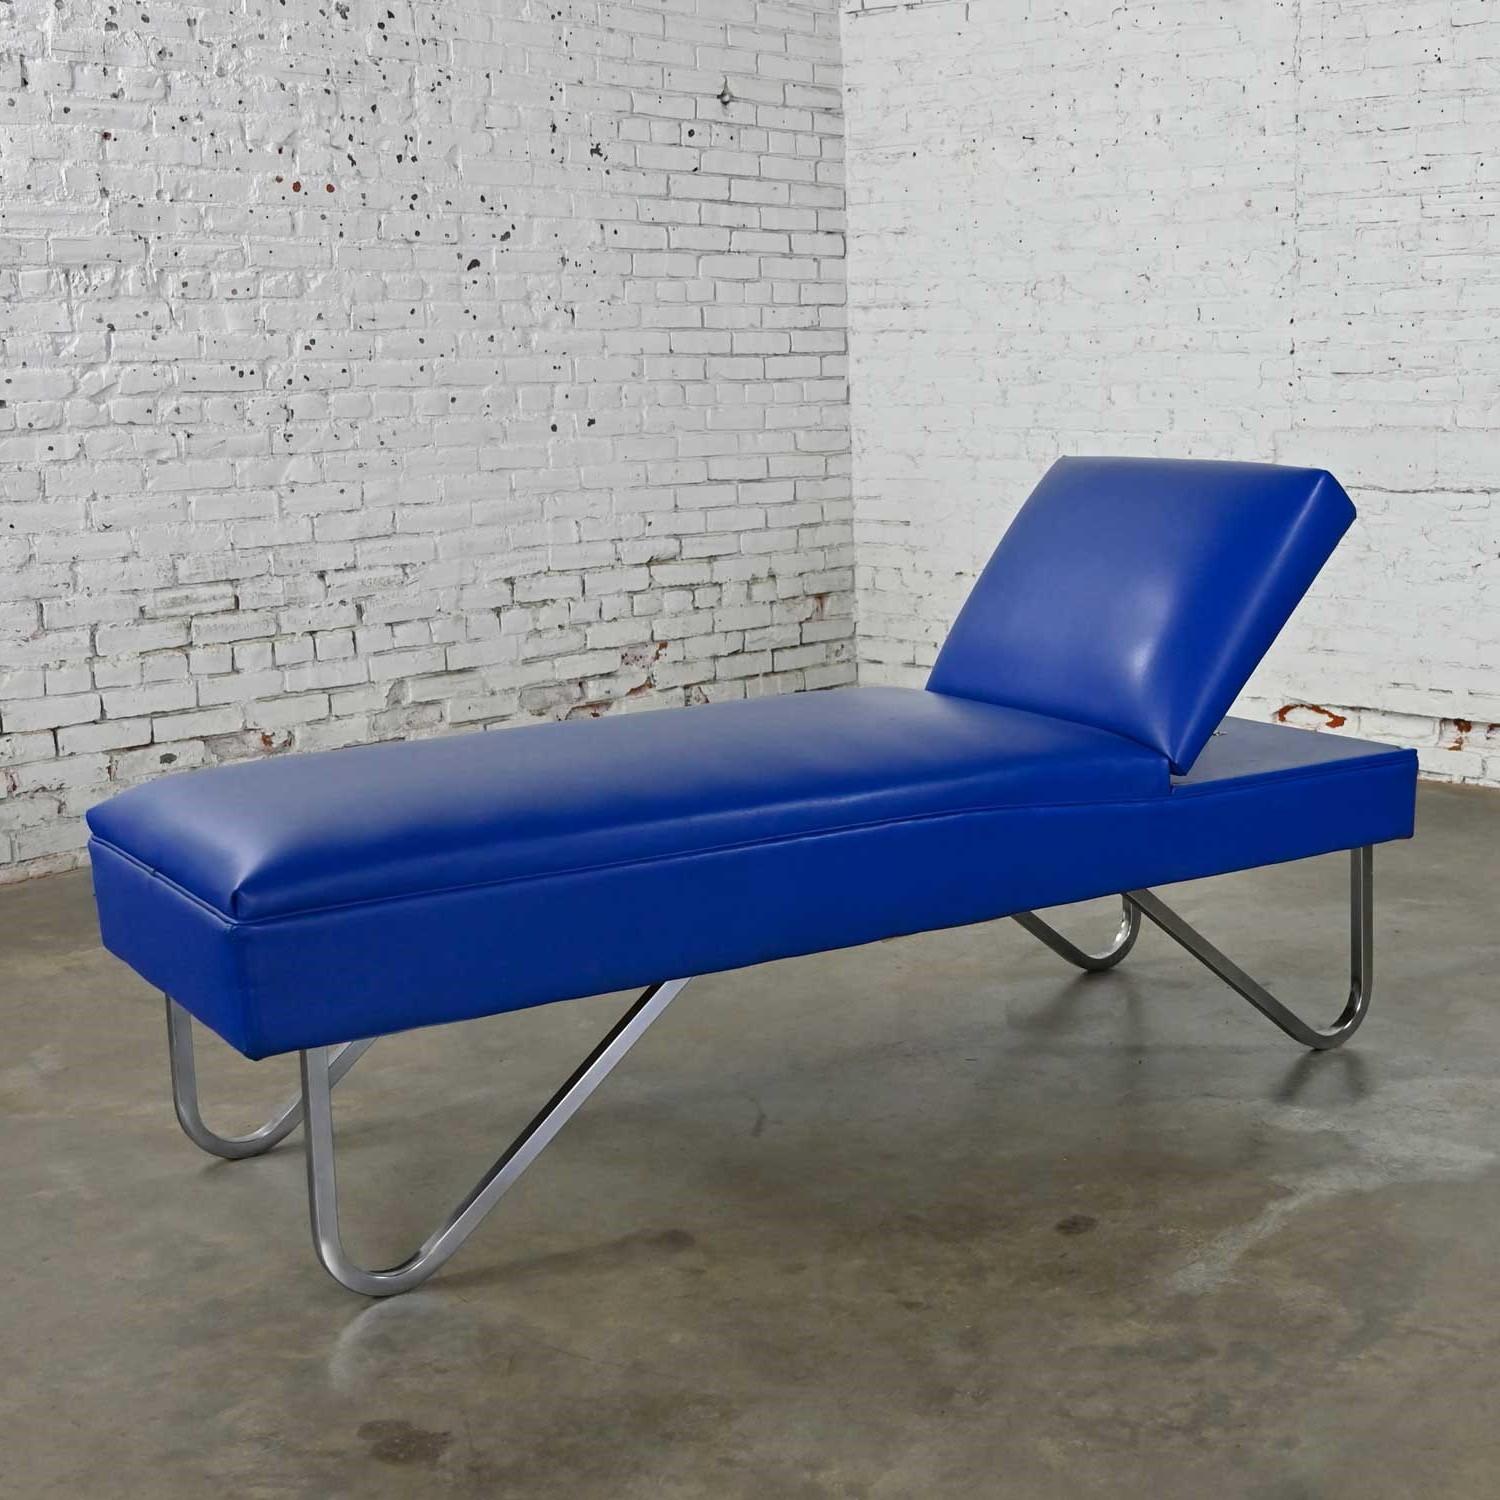 20th Century MCM Streamline Modern Industrial Royal Blue Vinyl & Chrome Adjustable Chaise For Sale